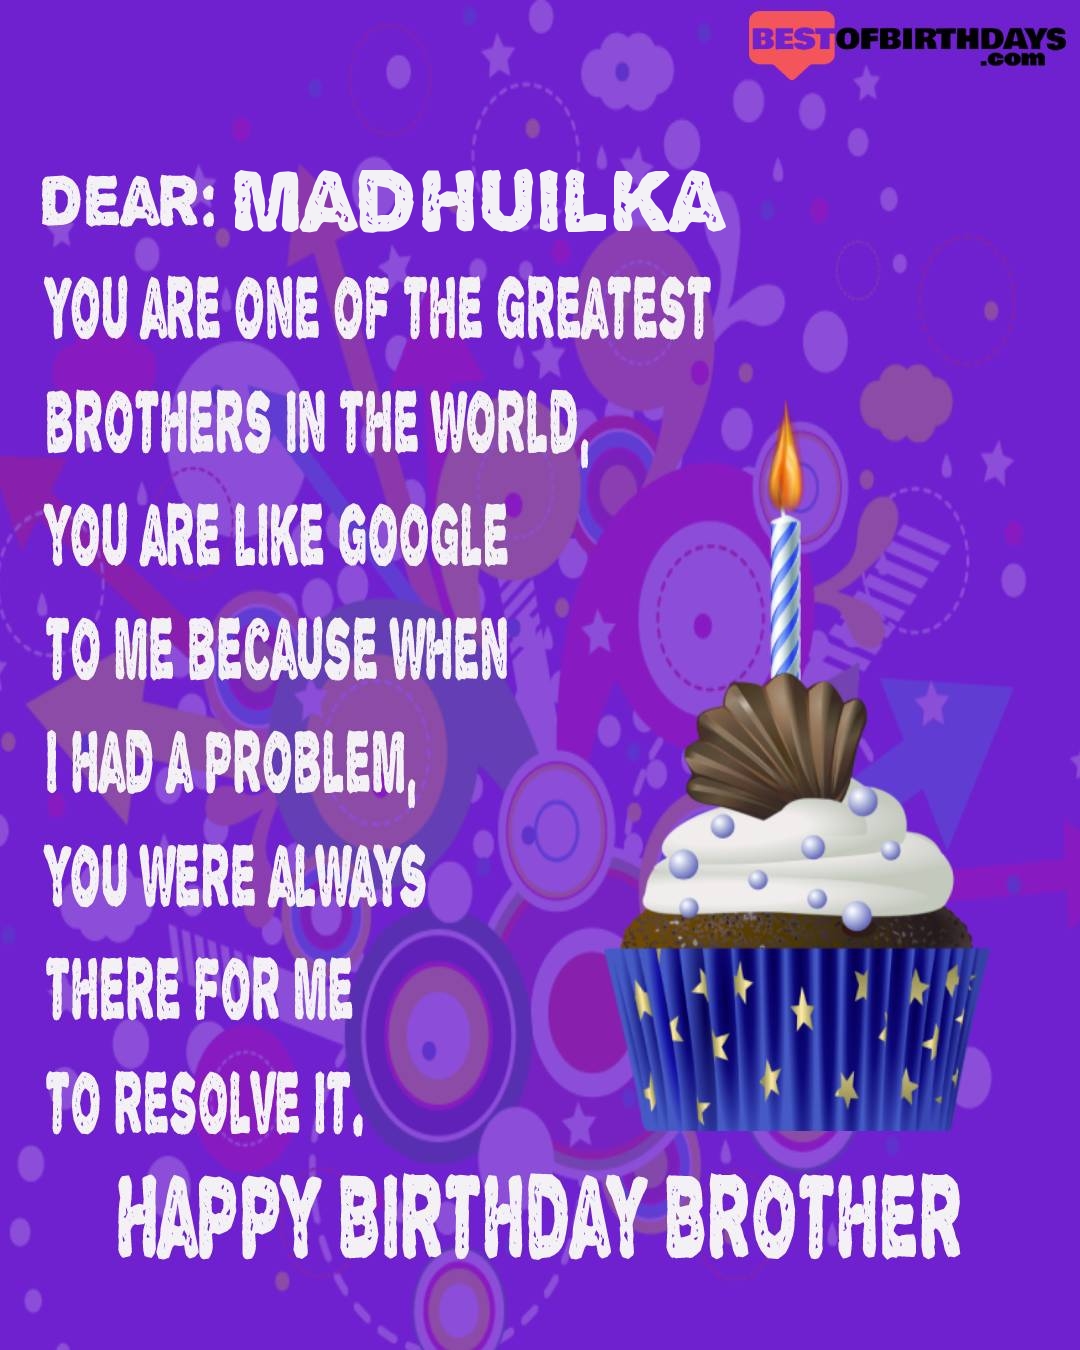 Happy birthday madhuilka bhai brother bro